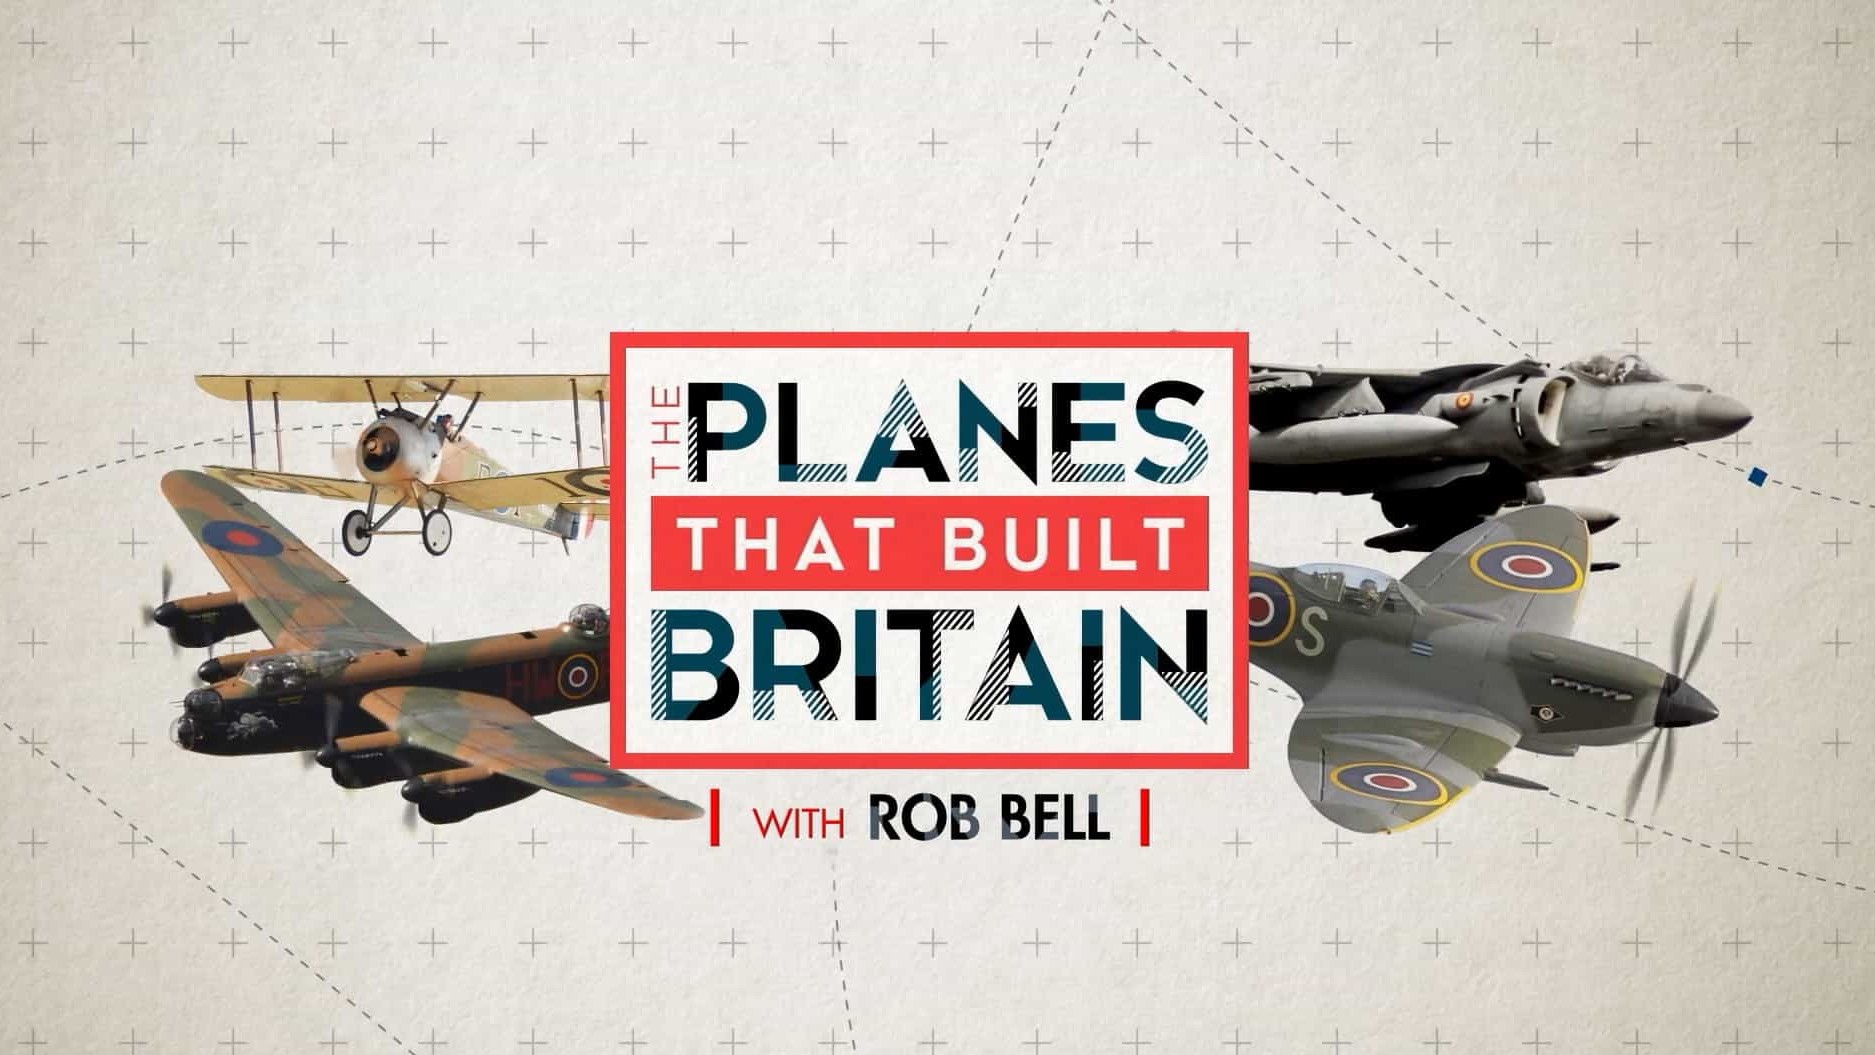 Ch5纪录片《塑造英国的飞机 The Planes That Built Britain with Rob Bell 2022》第1季全4集 英语中英双字 1080P高清网盘下载